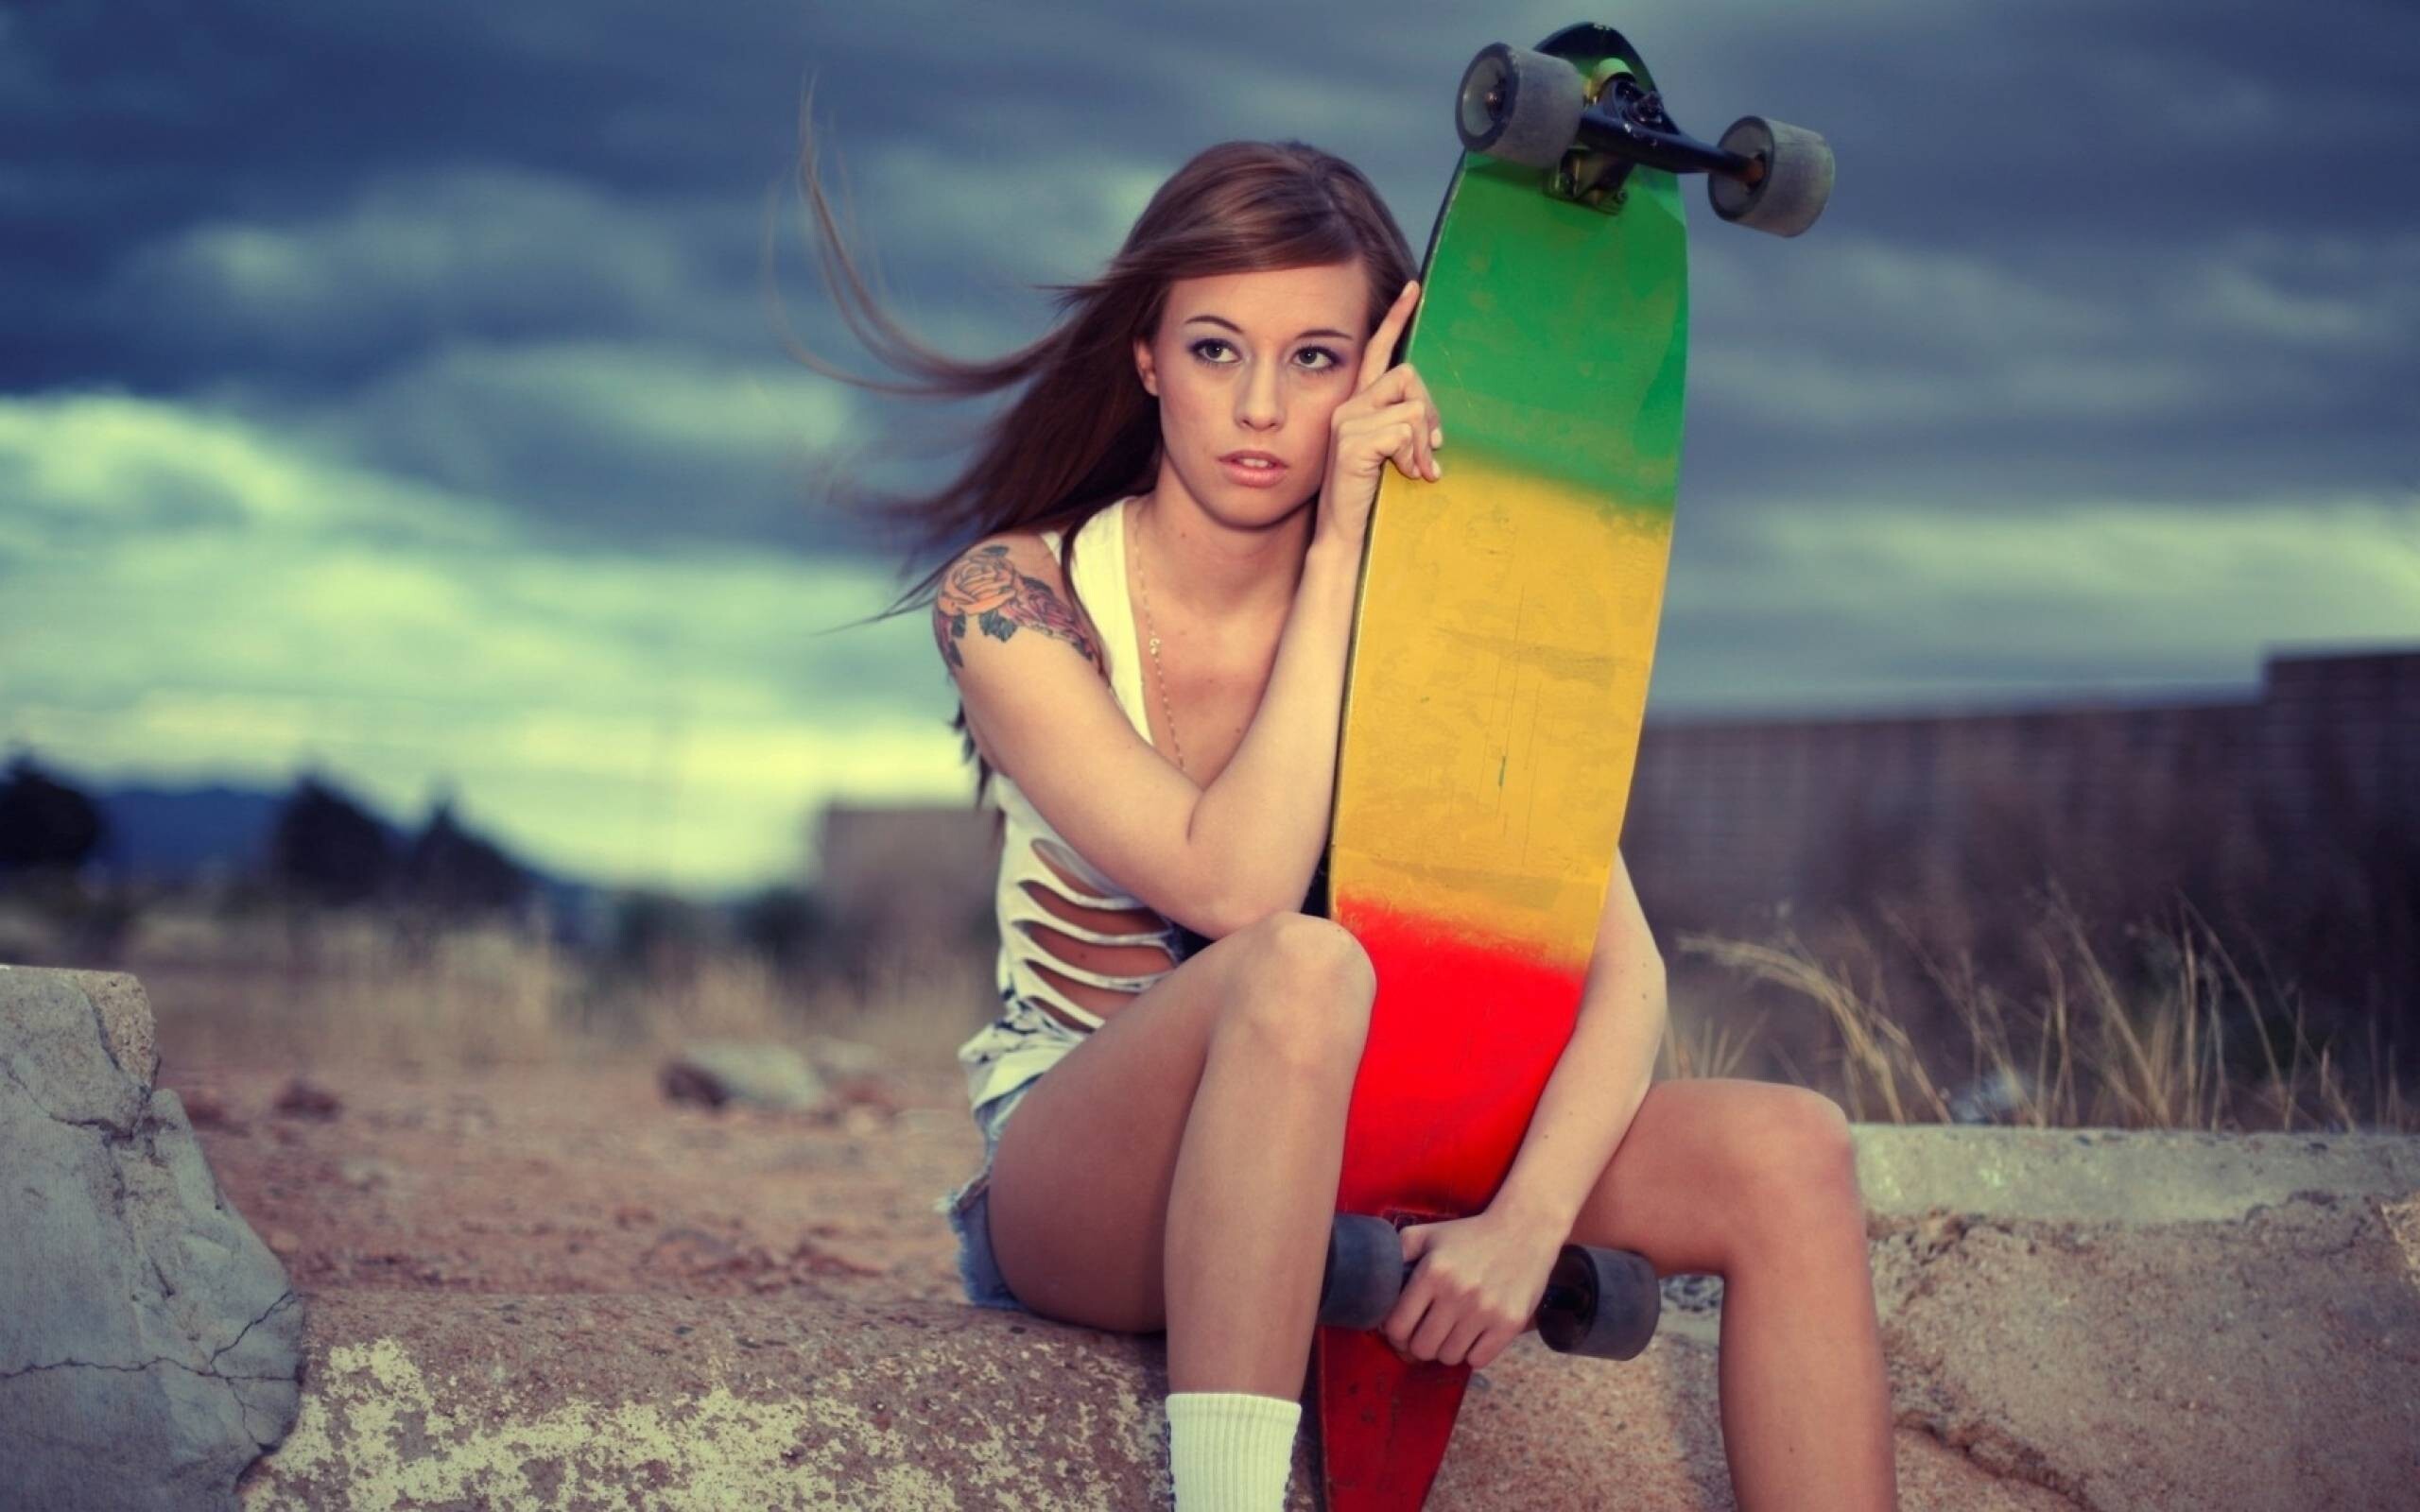 Girl Skateboarding: Skateboard-deck art, 7-ply construction, Seven layers of maple wood, Location for longboarding. 2560x1600 HD Wallpaper.